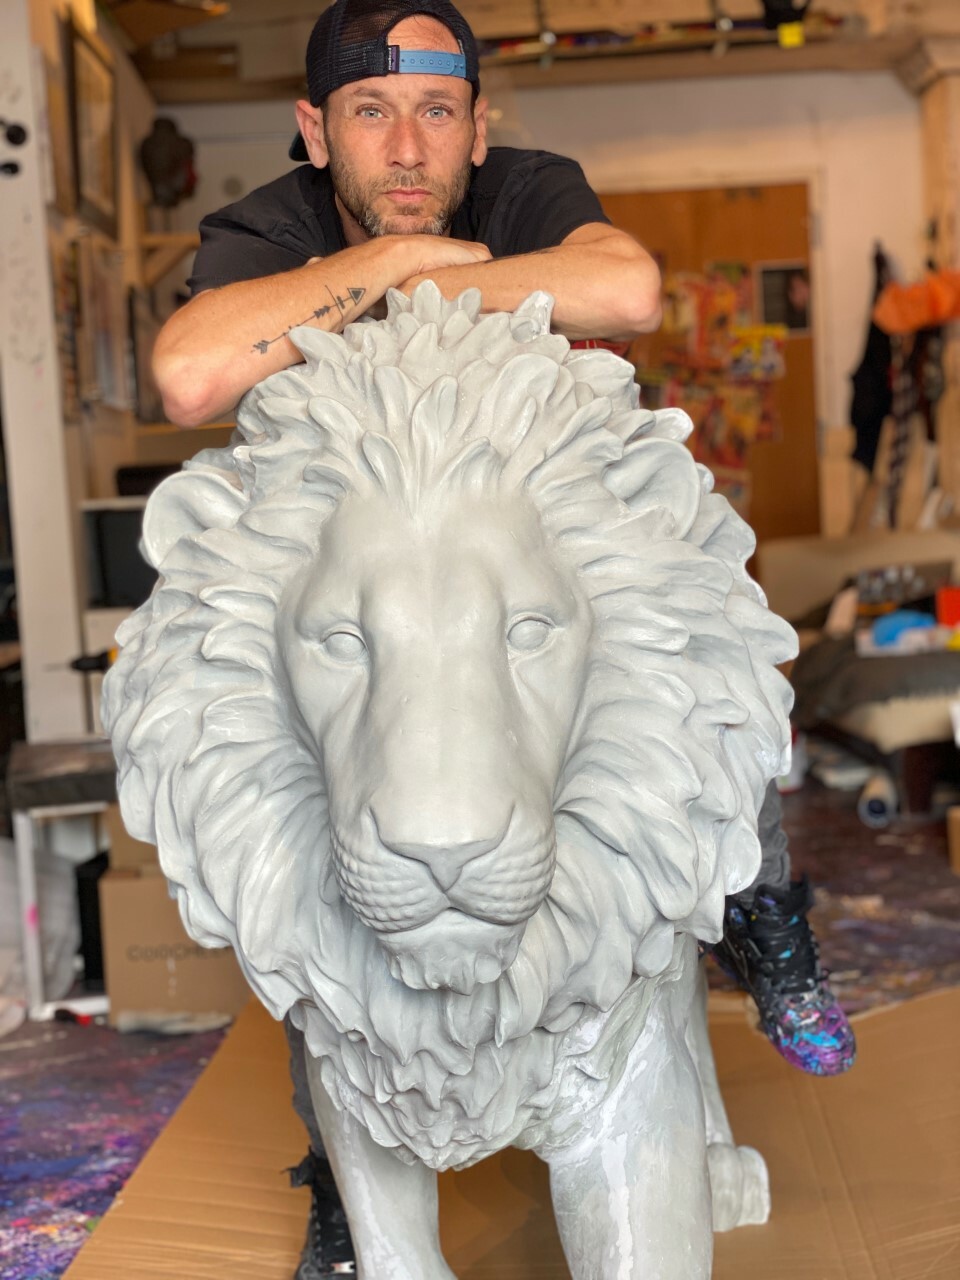 Jeremy Penn with his lion sculpture.